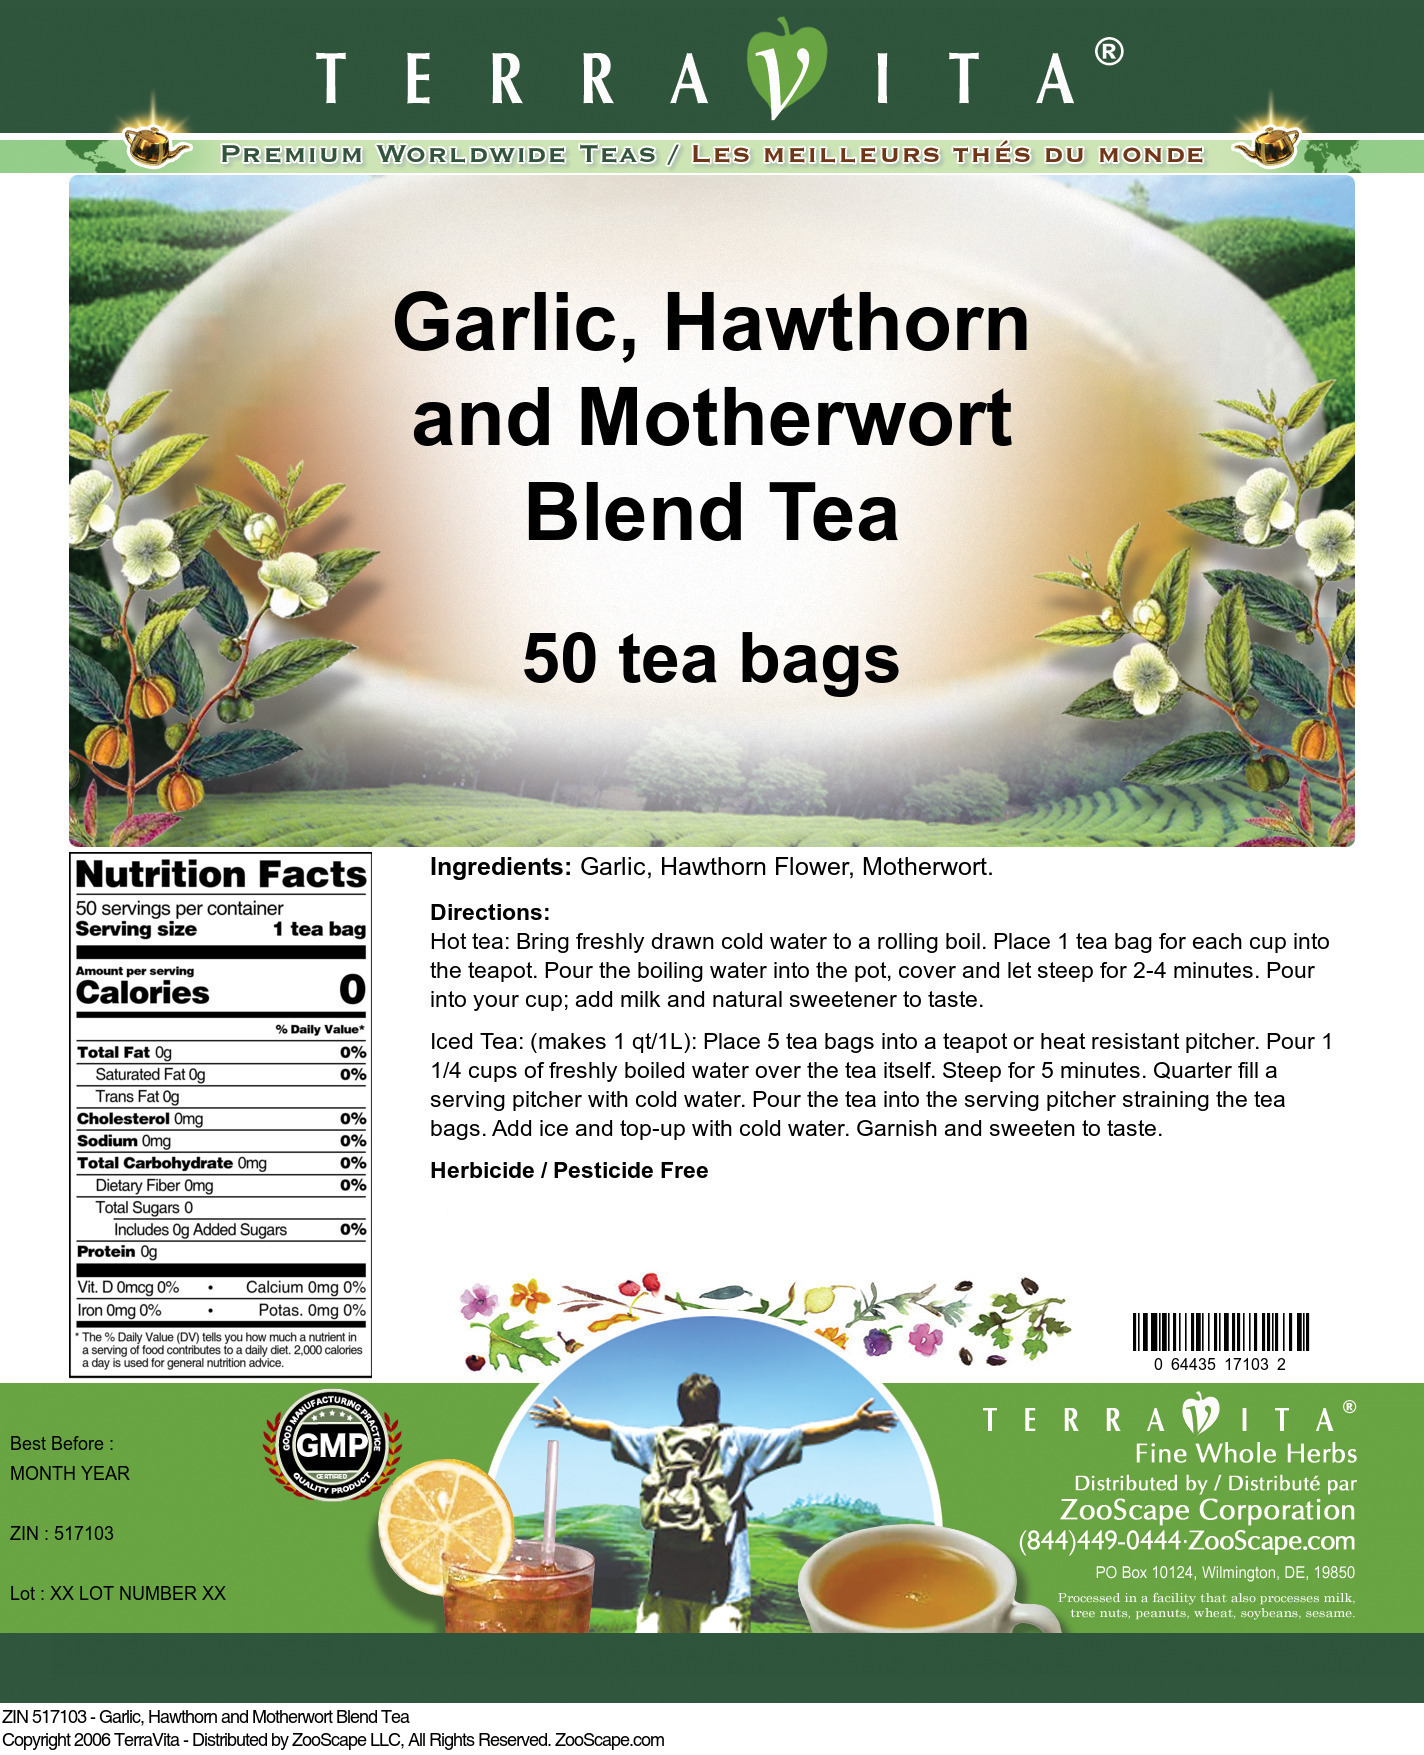 Garlic, Hawthorn and Motherwort Blend Tea - Label